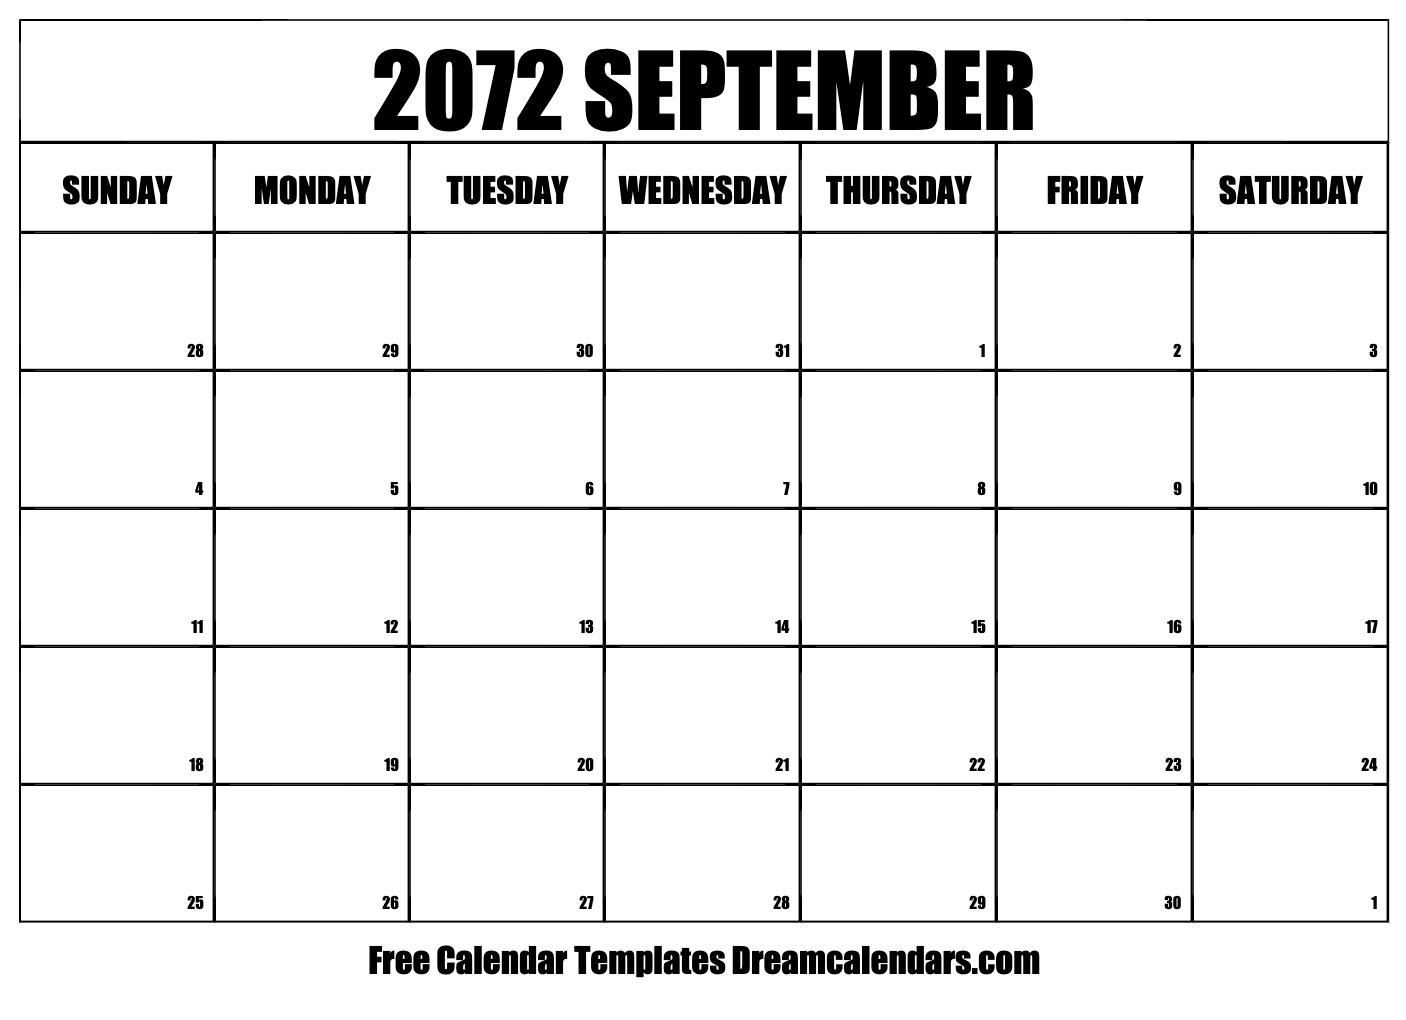 september-2072-calendar-free-blank-printable-with-holidays